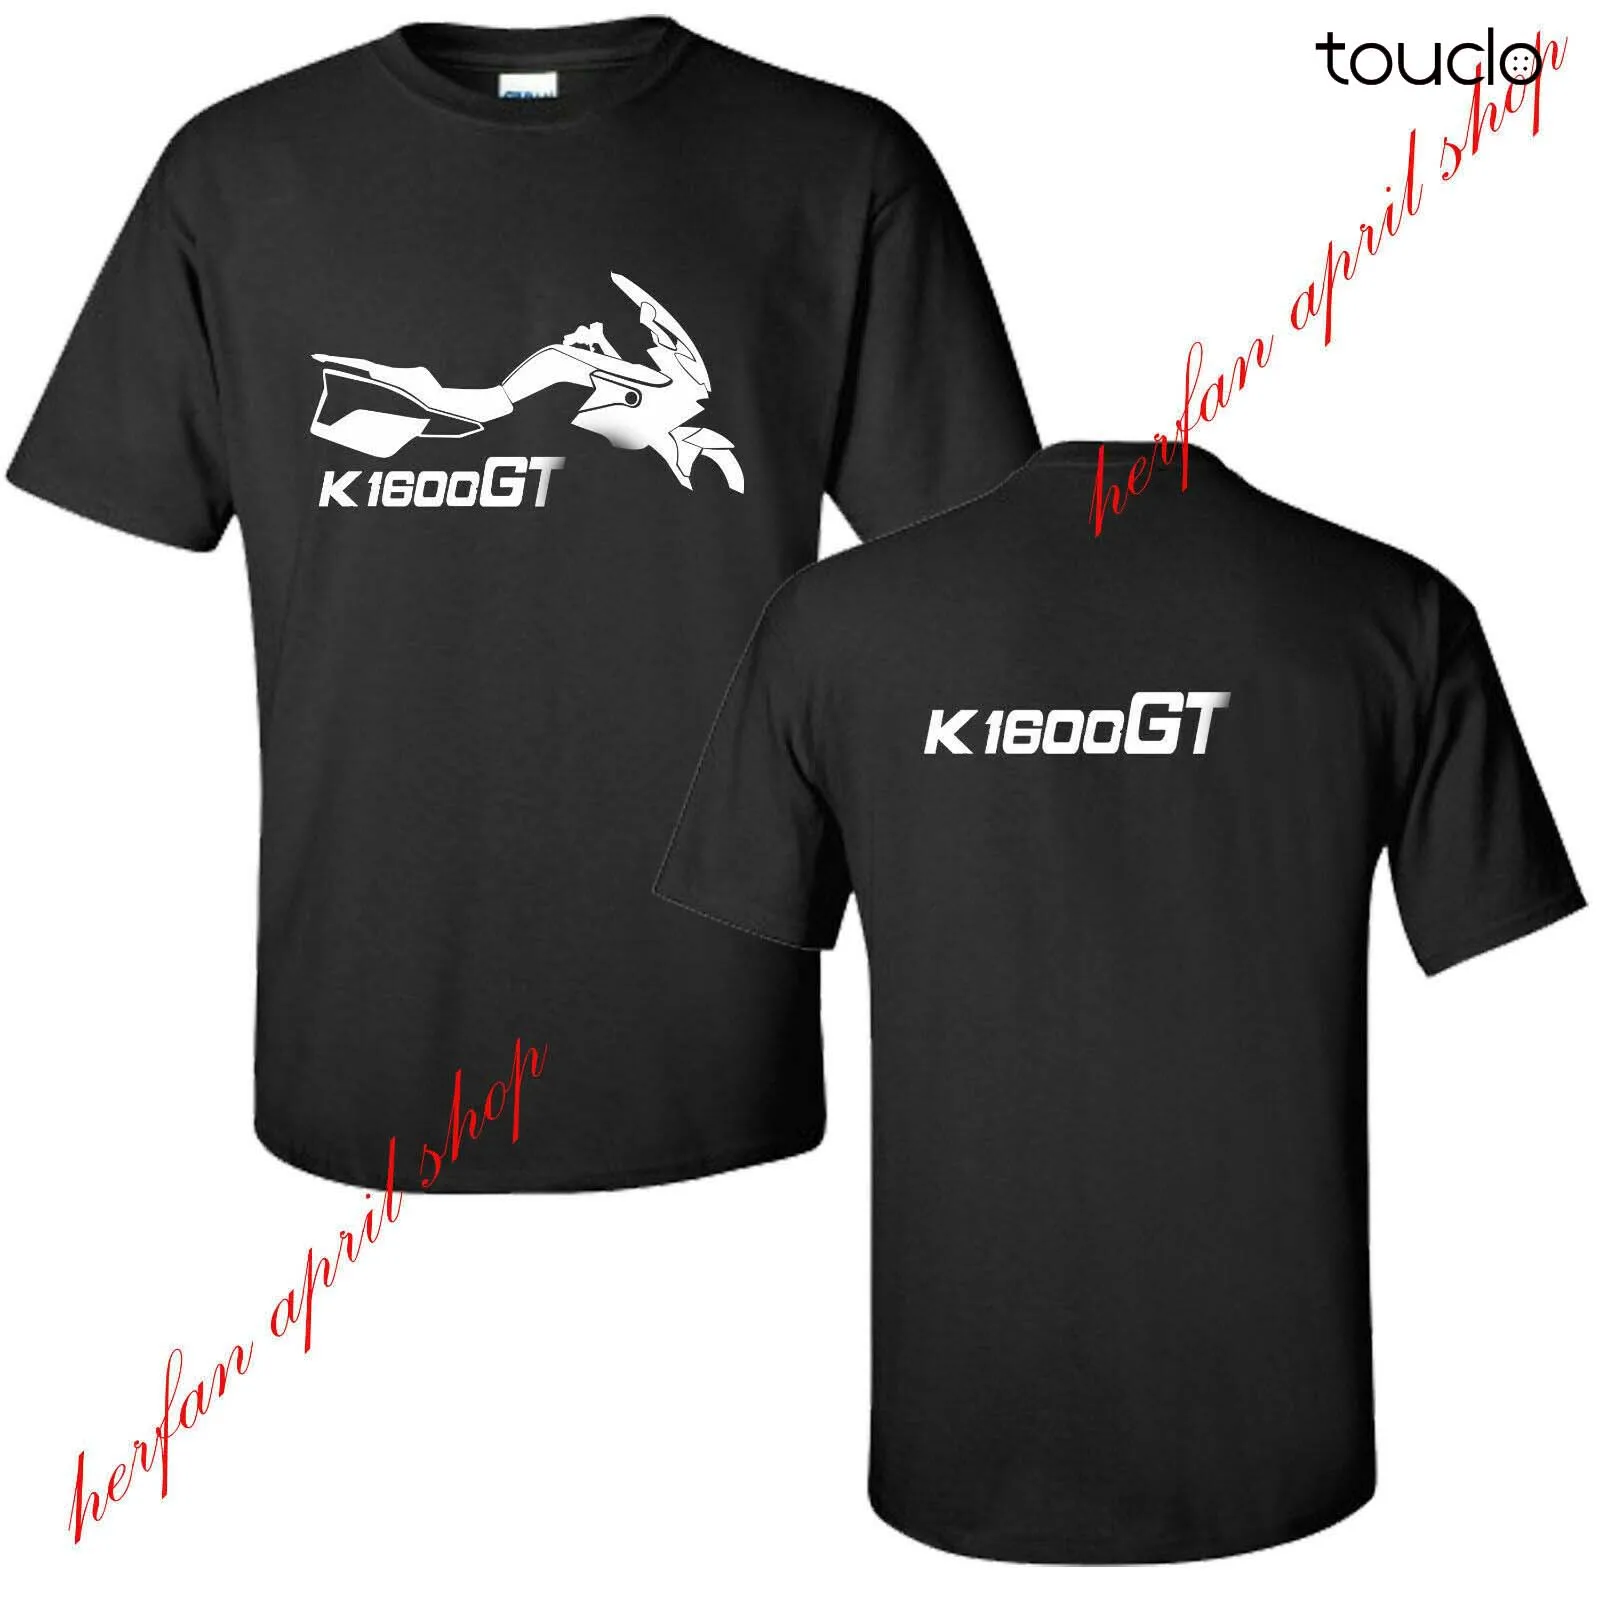 

New Tee Shirt K1600Gt, K1600Gtl, K1600B Motorsport 2020 Fashion New Top Tees Novelty O-Neck Tops 80S T Shirts